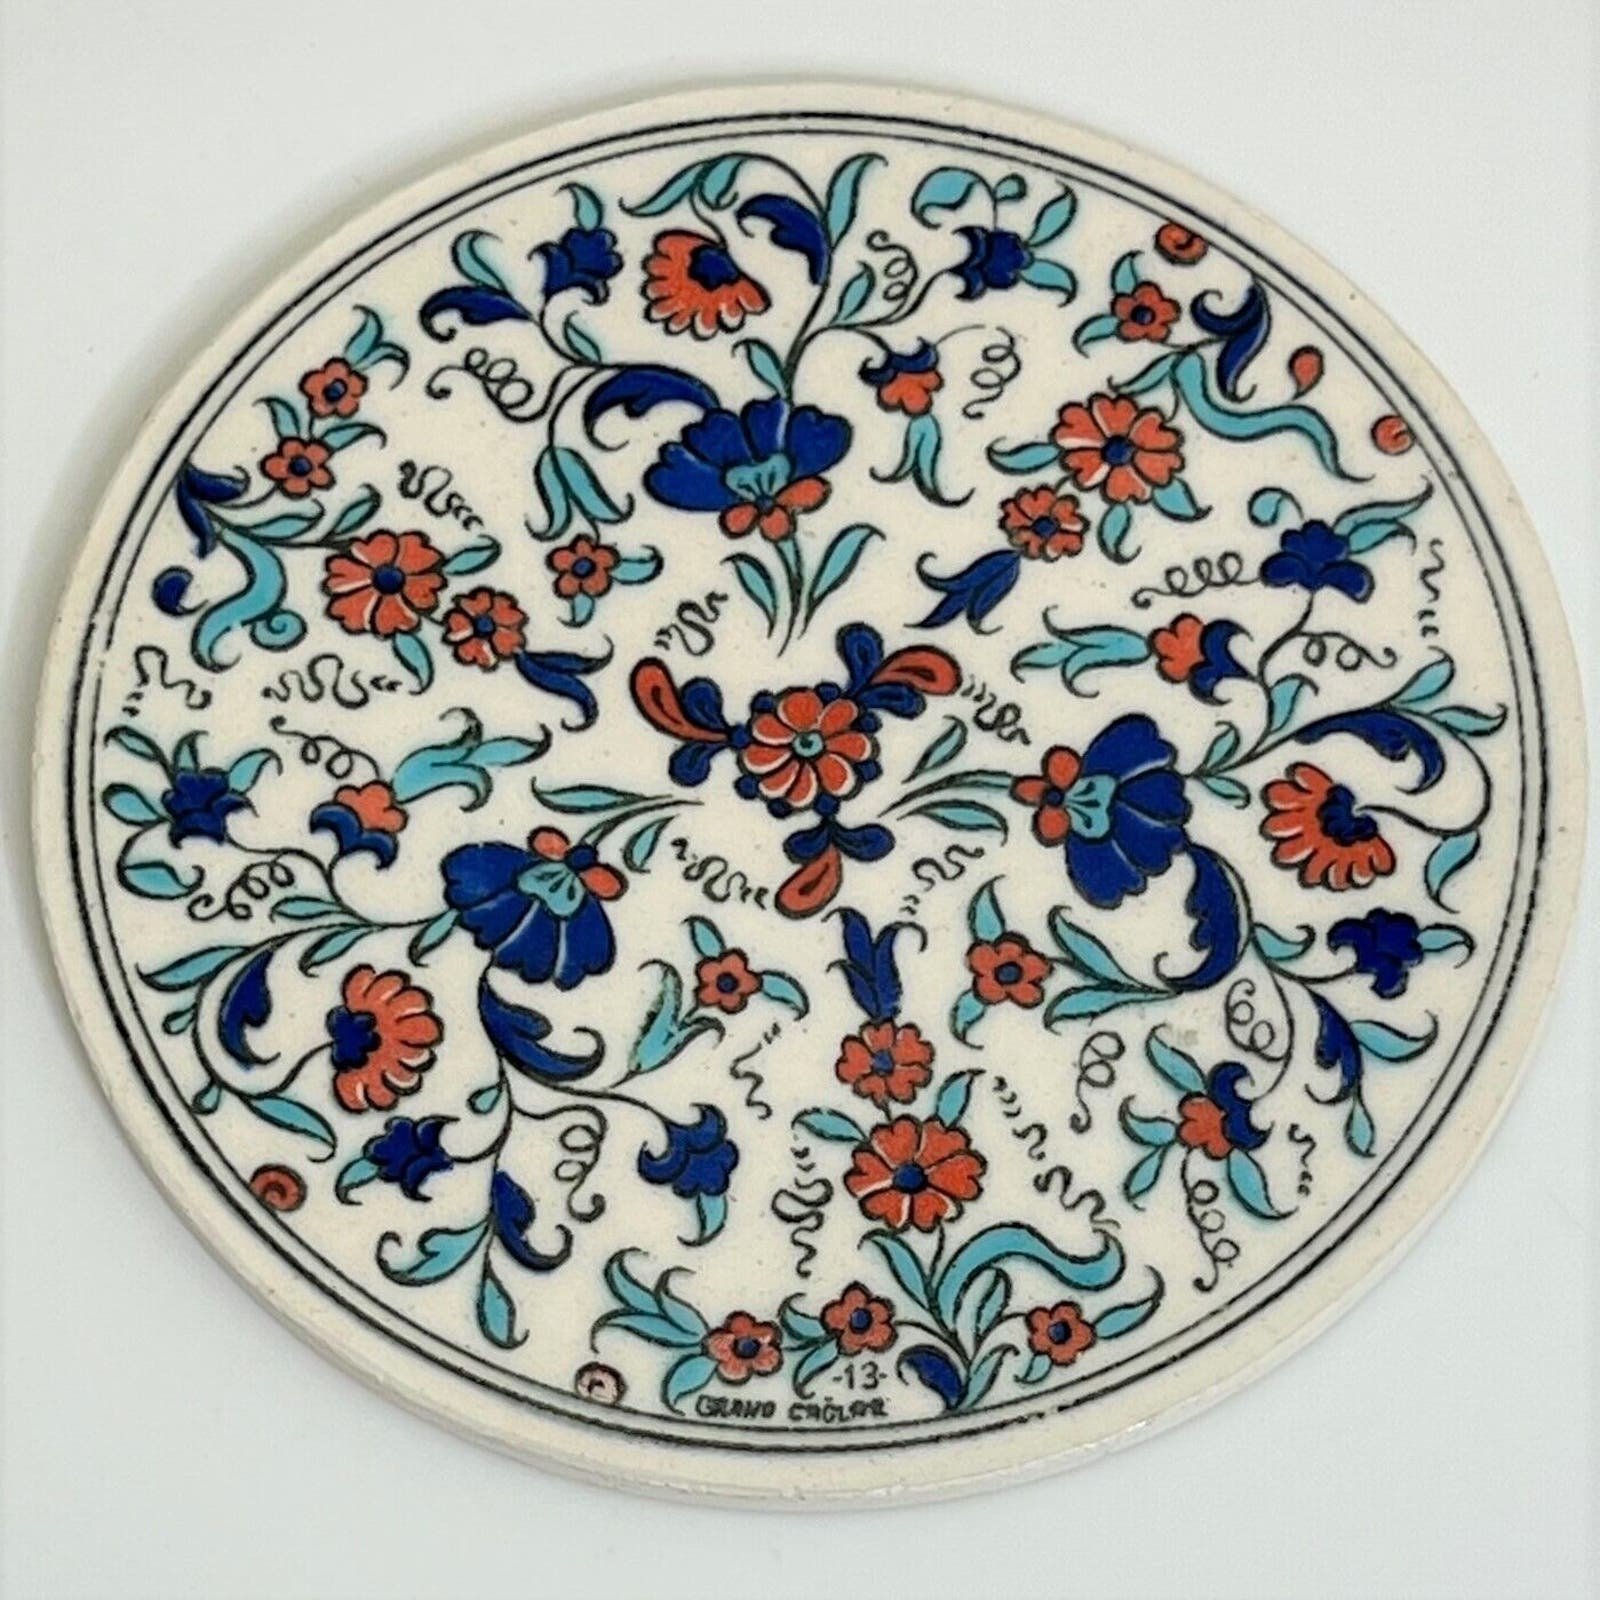 Turkey Grand Caglar 13 Glazed Pottery Round Trivet Tile Blue Red White Floral aP6mTs6GF